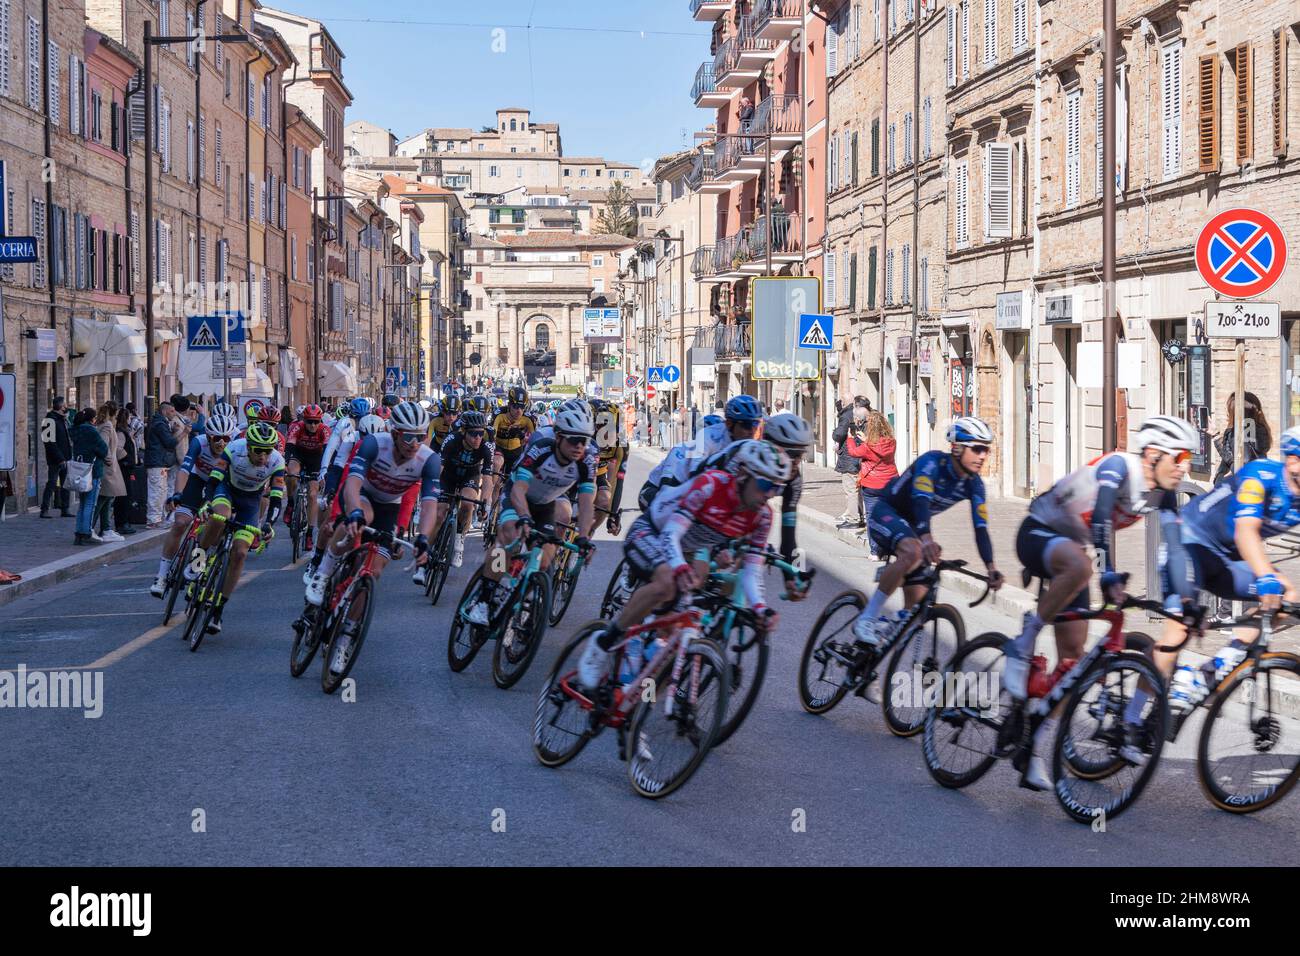 Corso Cairoli, passage de la course cycliste de Tirreno Adriatica, Macerata, Marche, Italie, Europe Banque D'Images